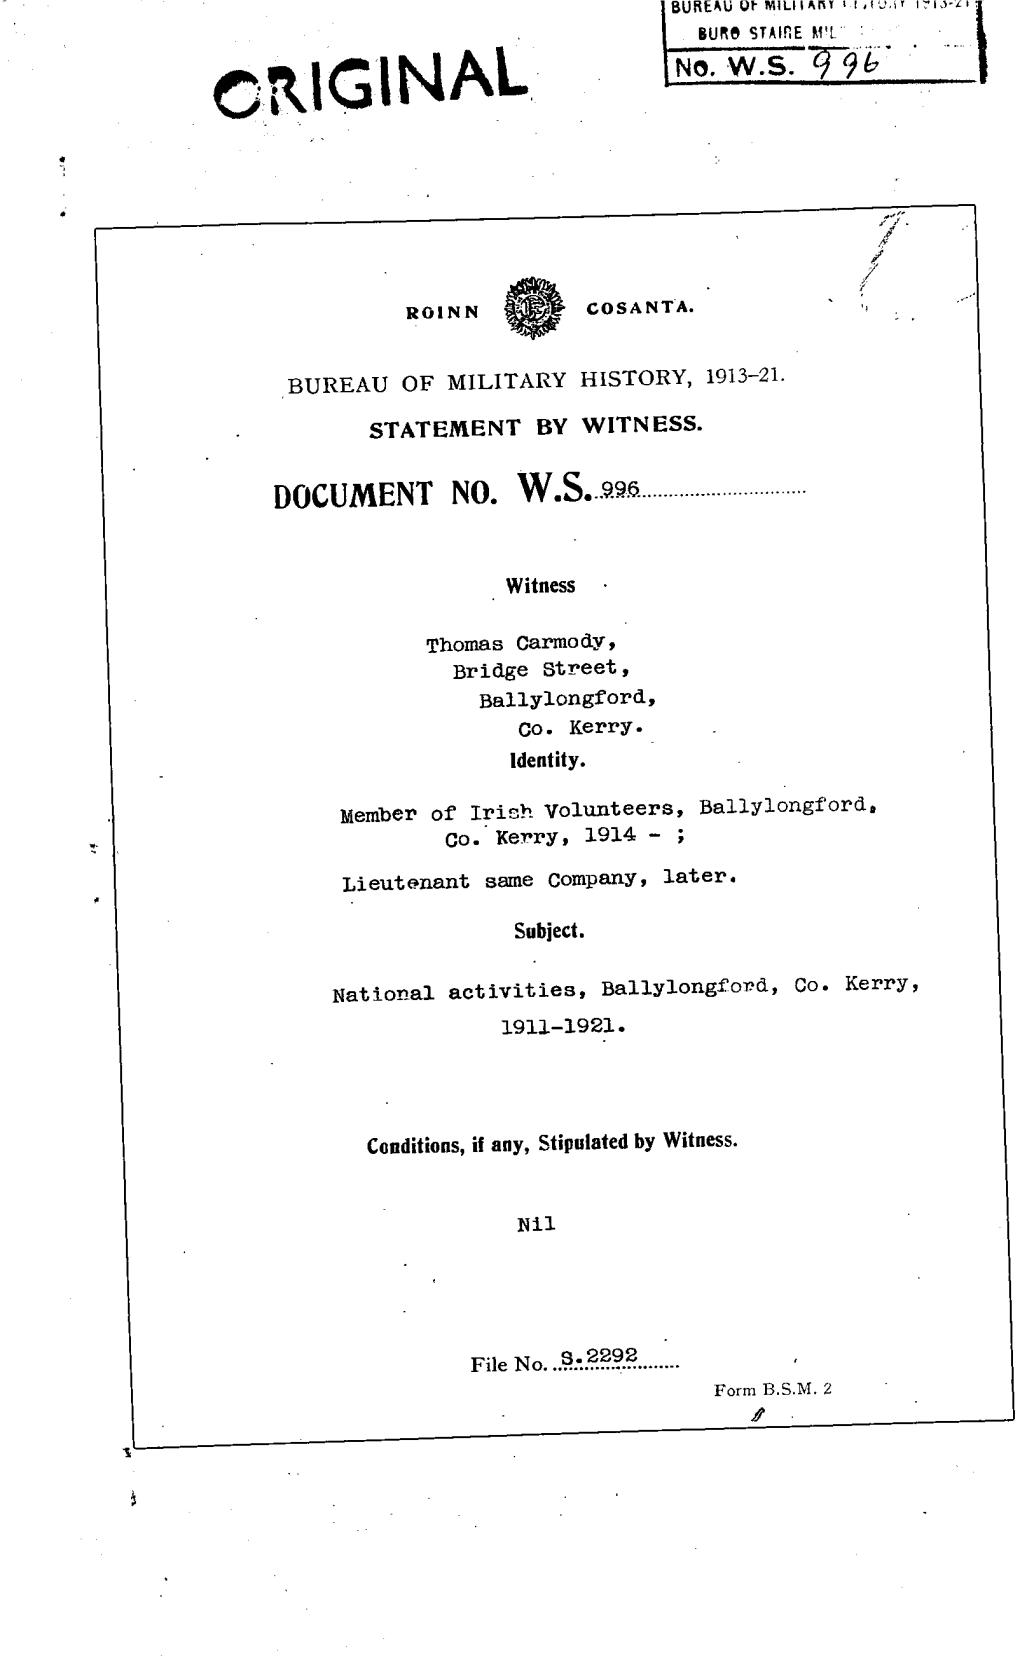 ROINN COSANTA. BUREAU OFMILITARY HISTORY, 1913-21. STATEMENT by WITNESS. DOCUMENT NO. W.S. 996 Witness Thomas Carmody, Bridge St